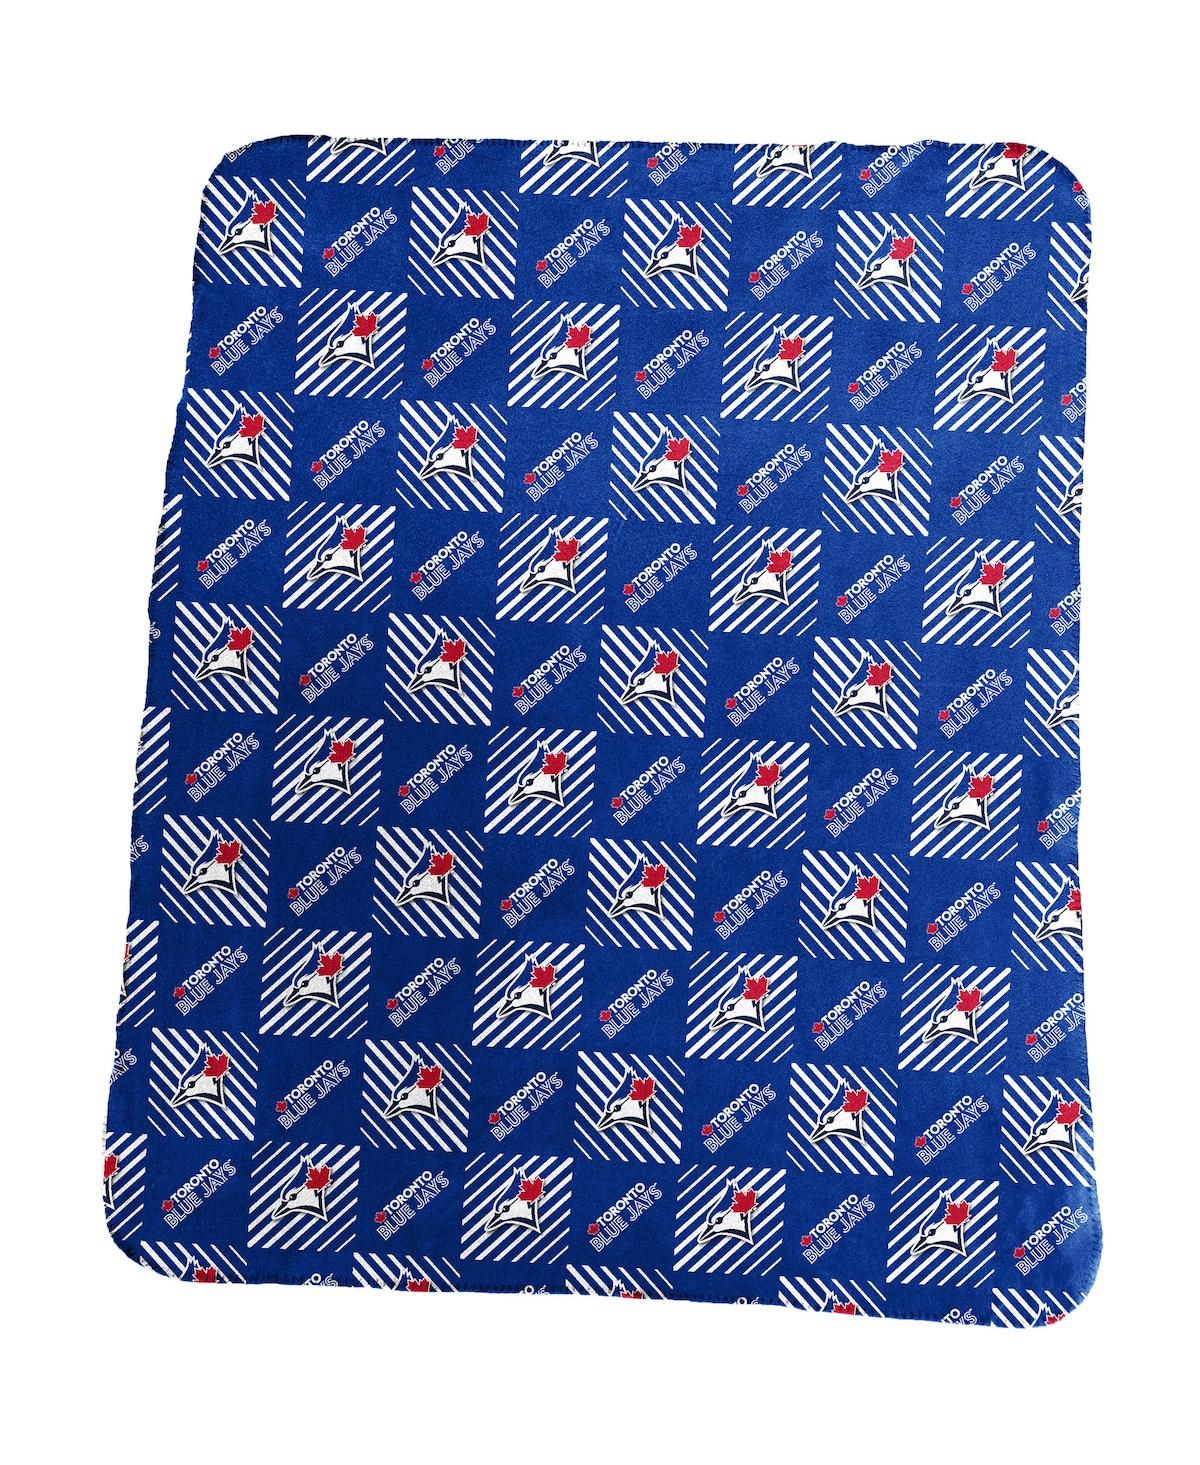 Logo Brands Toronto Blue Jays 60'' X 50'' Repeating Pattern Fleece Throw Blanket In Royal